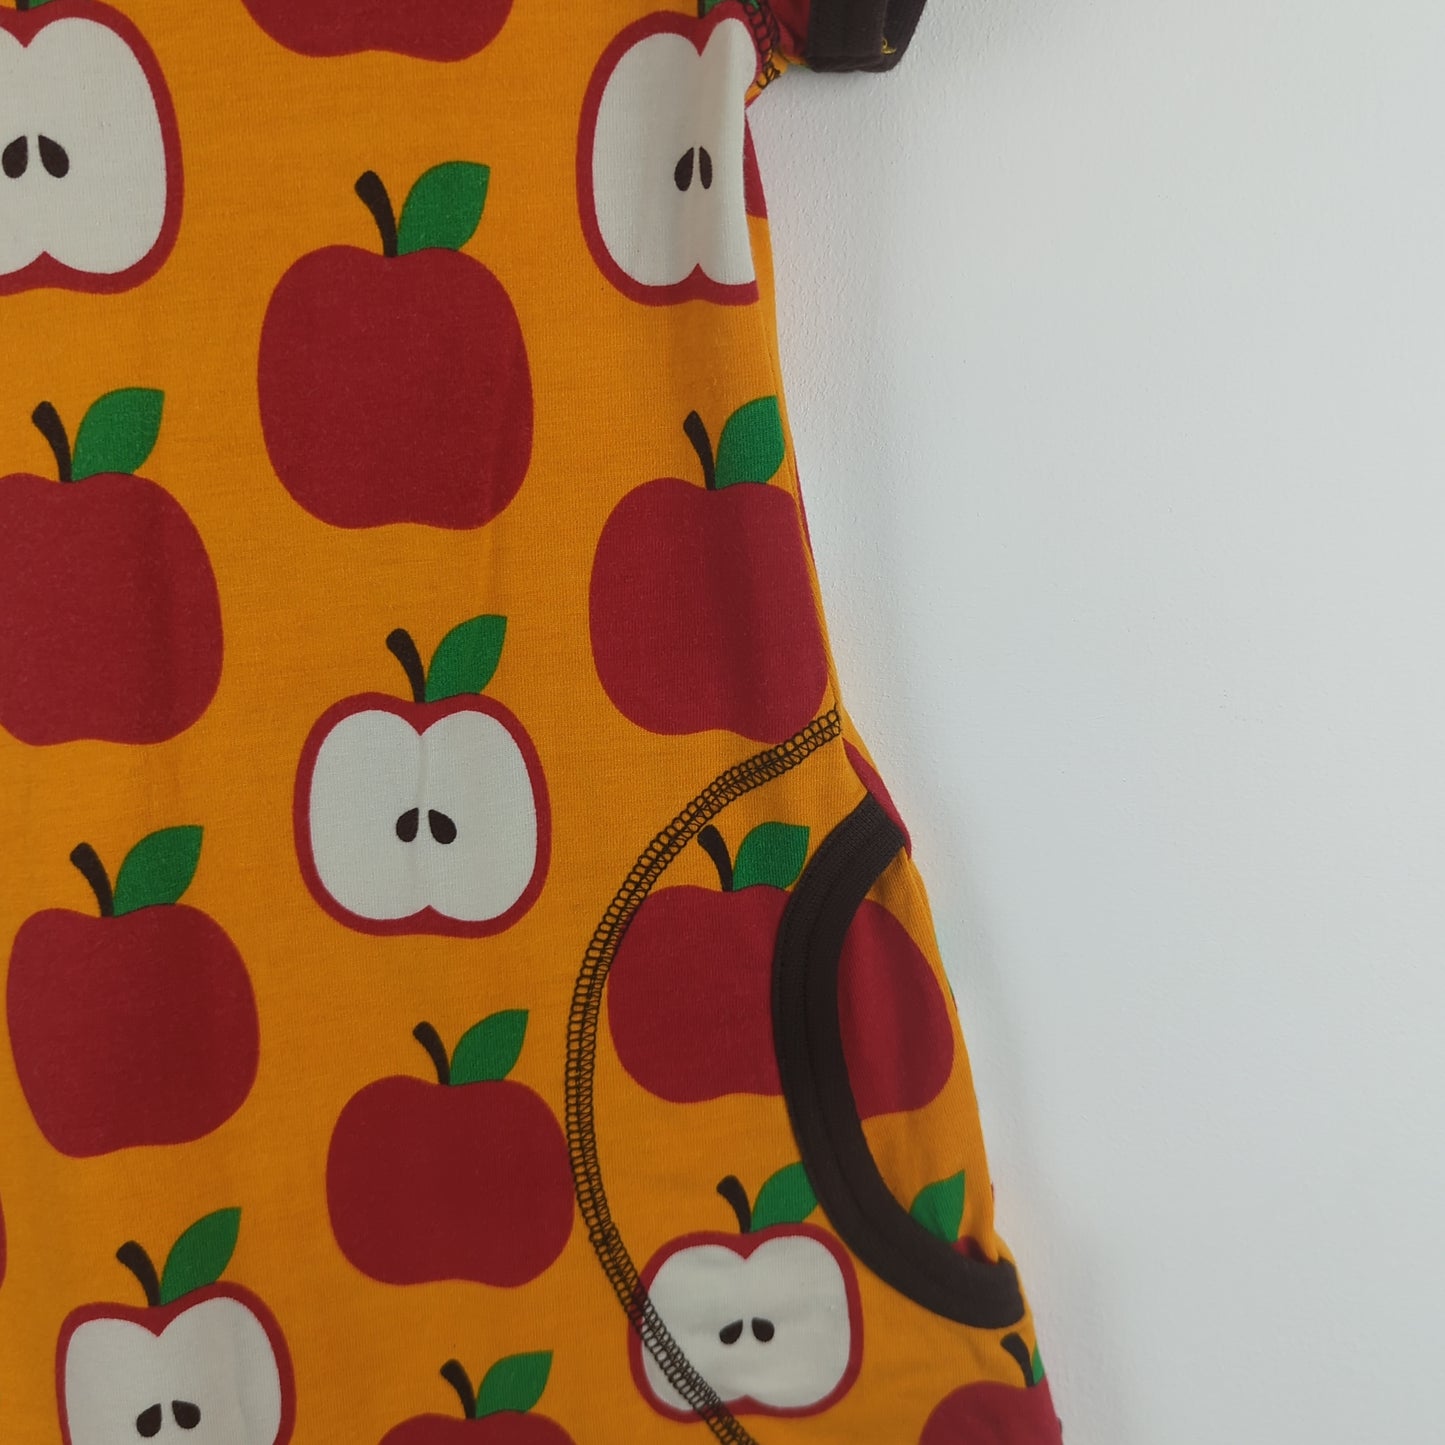 Preloved Maxomorra Dress - Apples (18-24m)